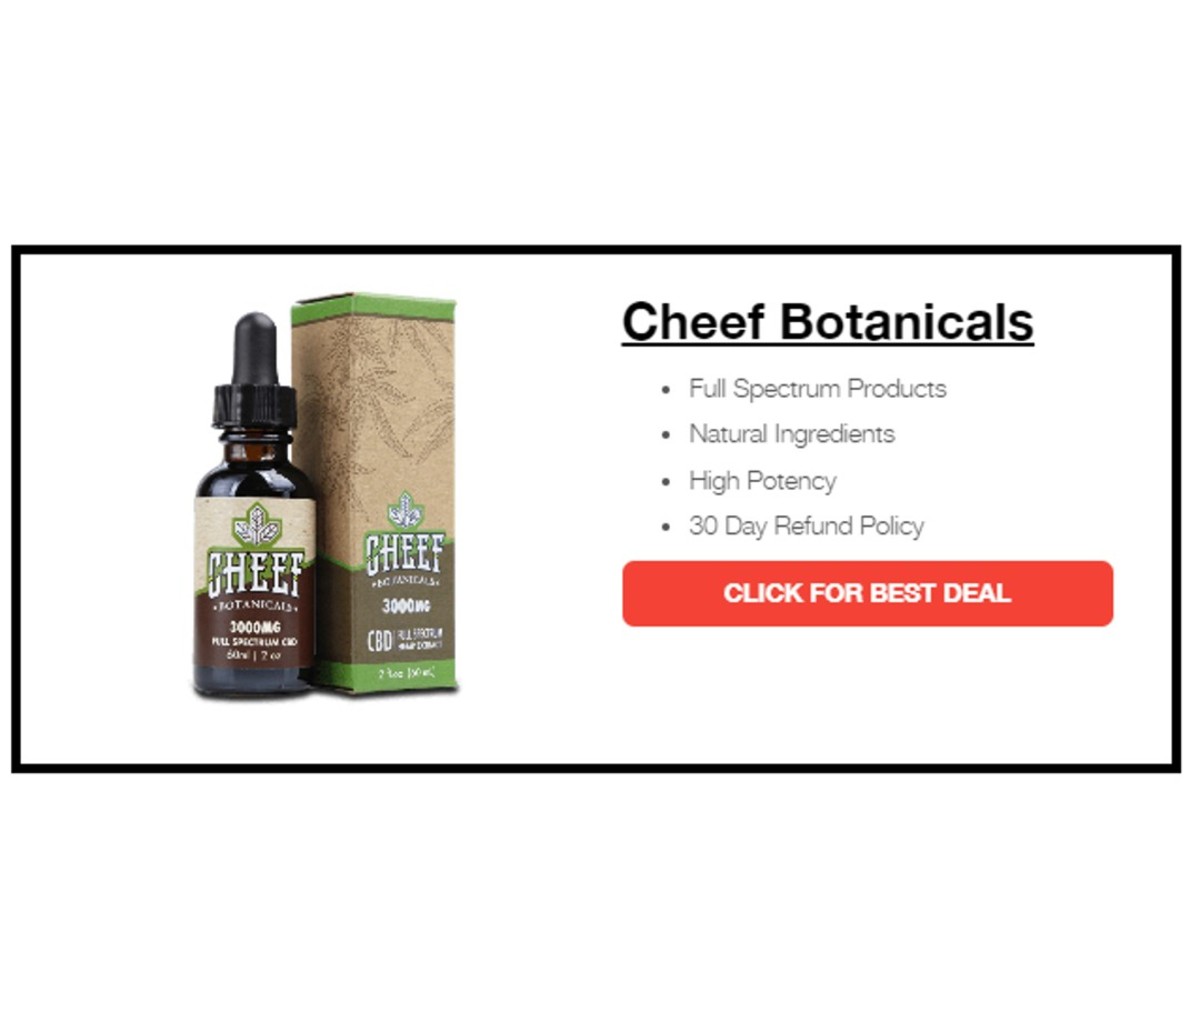 Cheef Botanicals - Popular Full-Spectrum Hemp Oil Brand